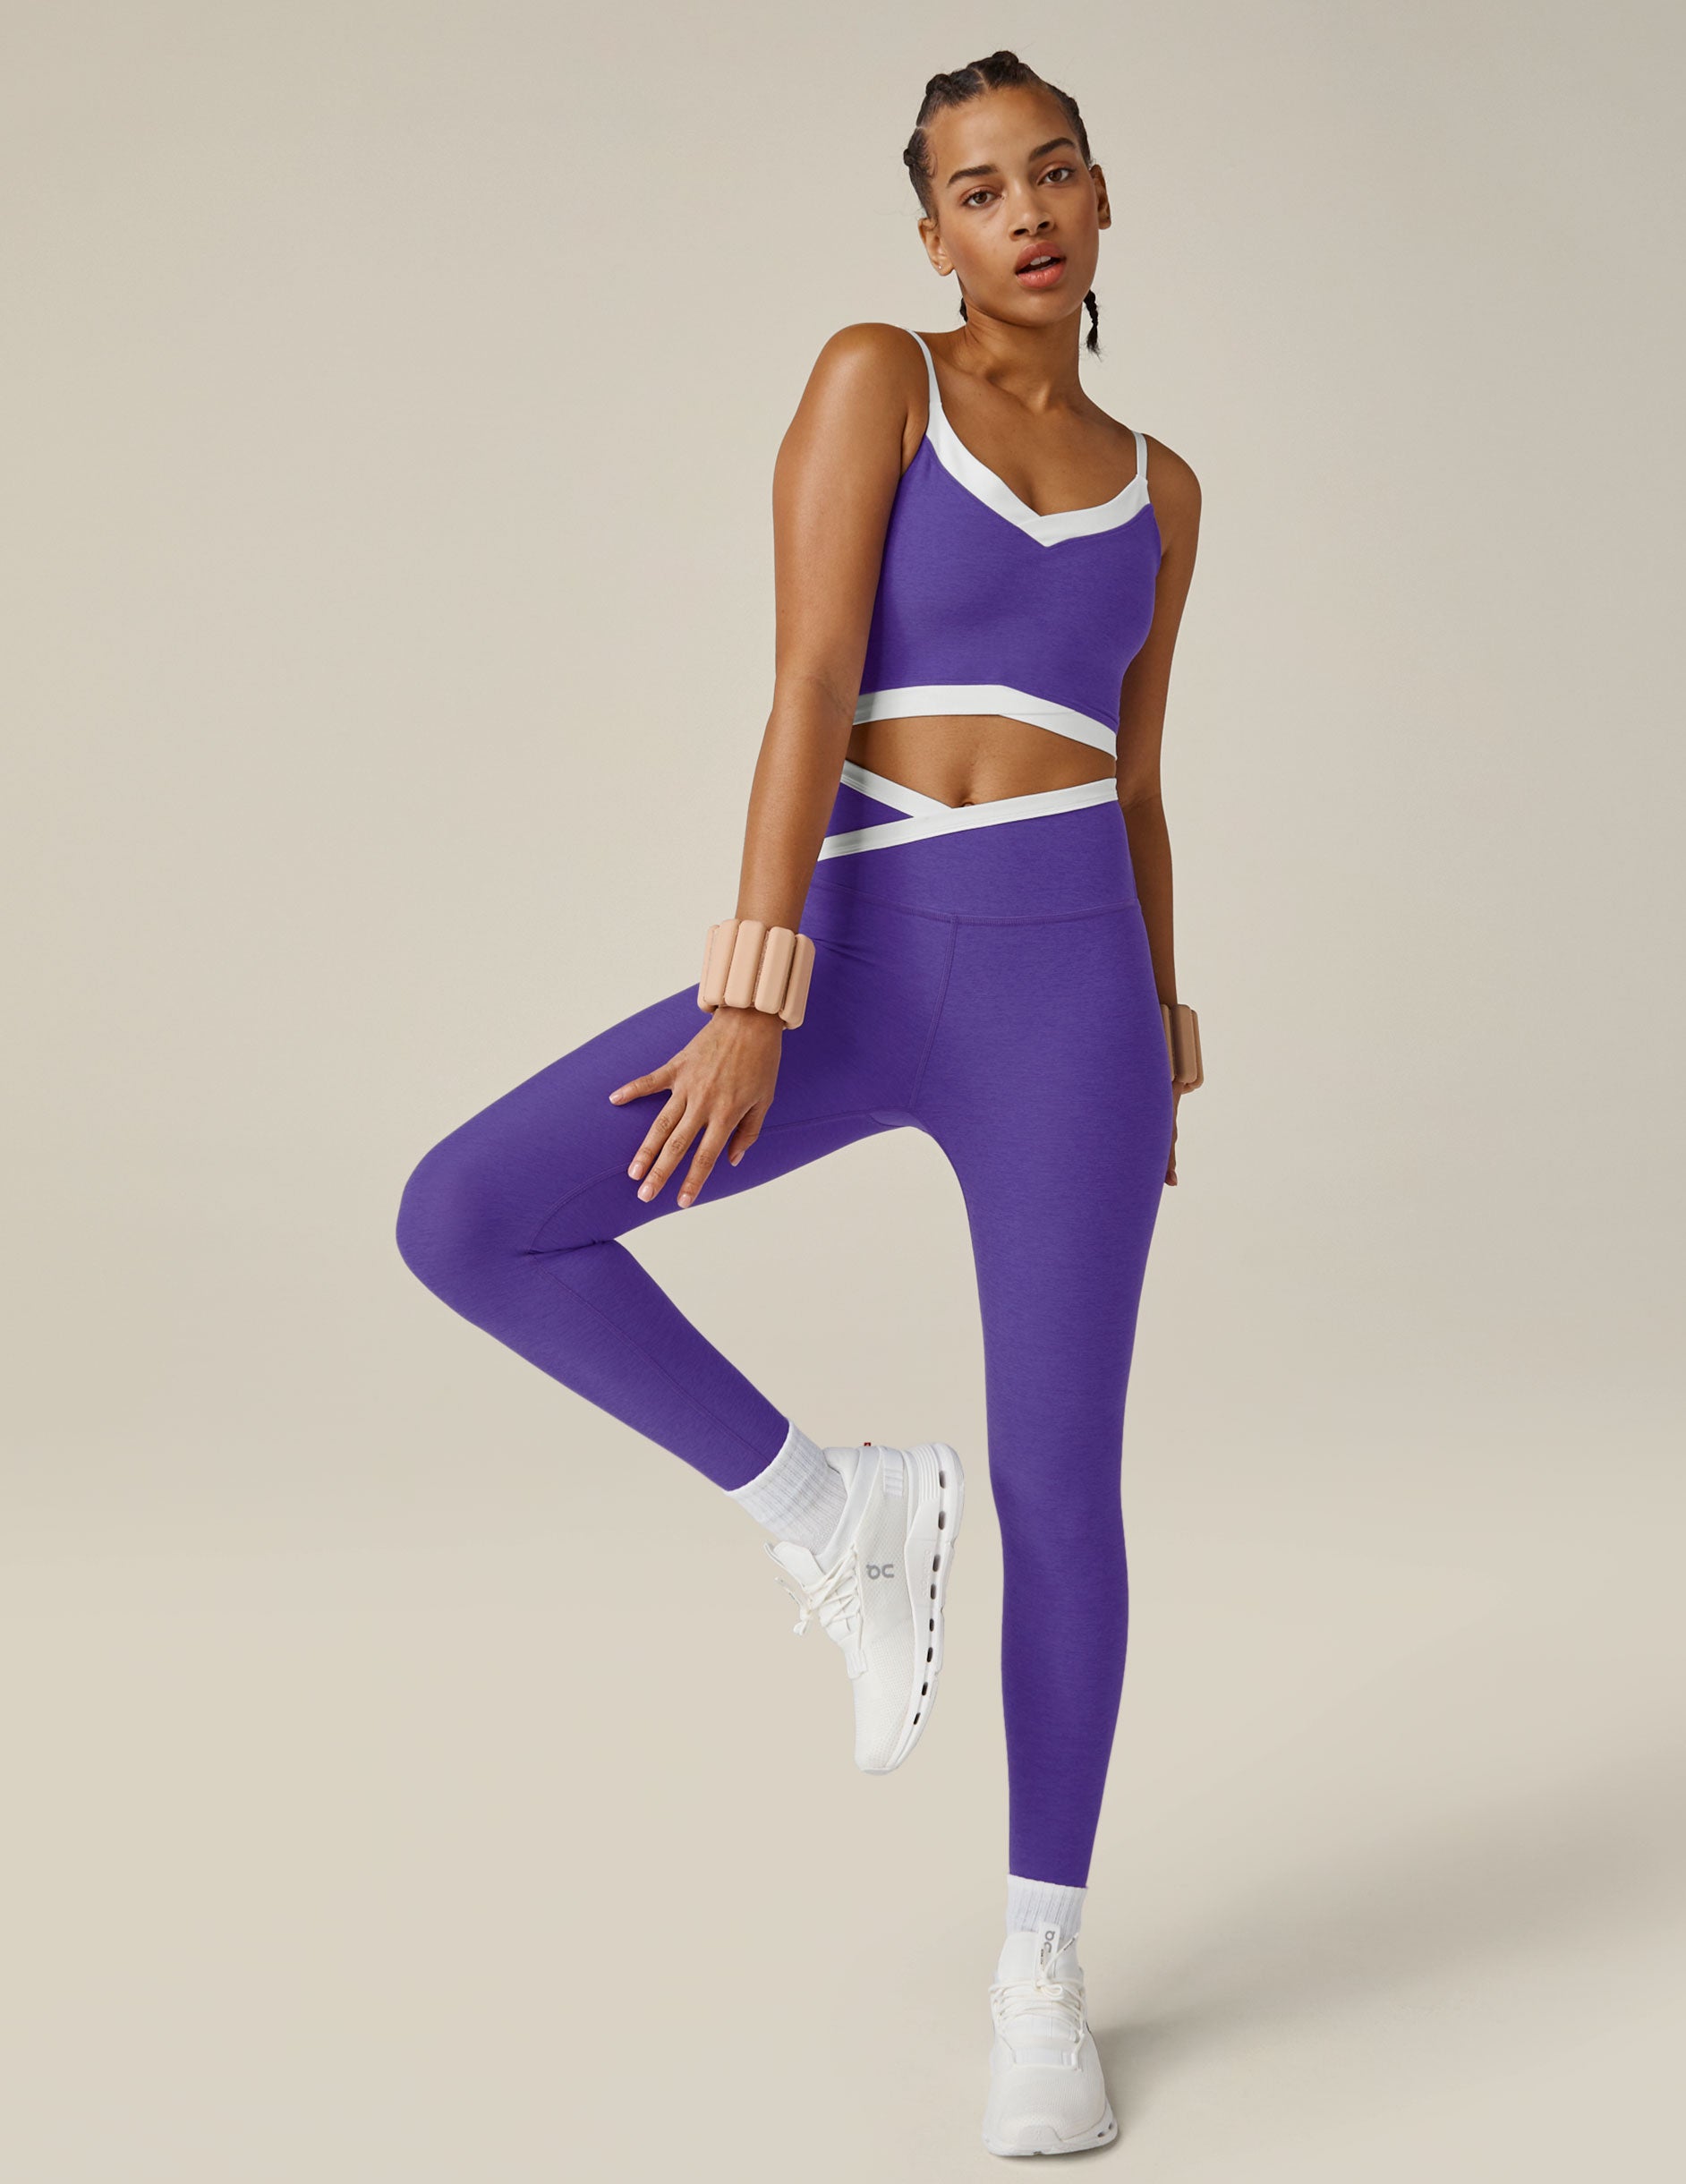 Hfyihgf V Cross Waist Leggings for Women Tummy Control Soft Workout Running  High Waisted Non See-Through Yoga Pants(Purple,M) 